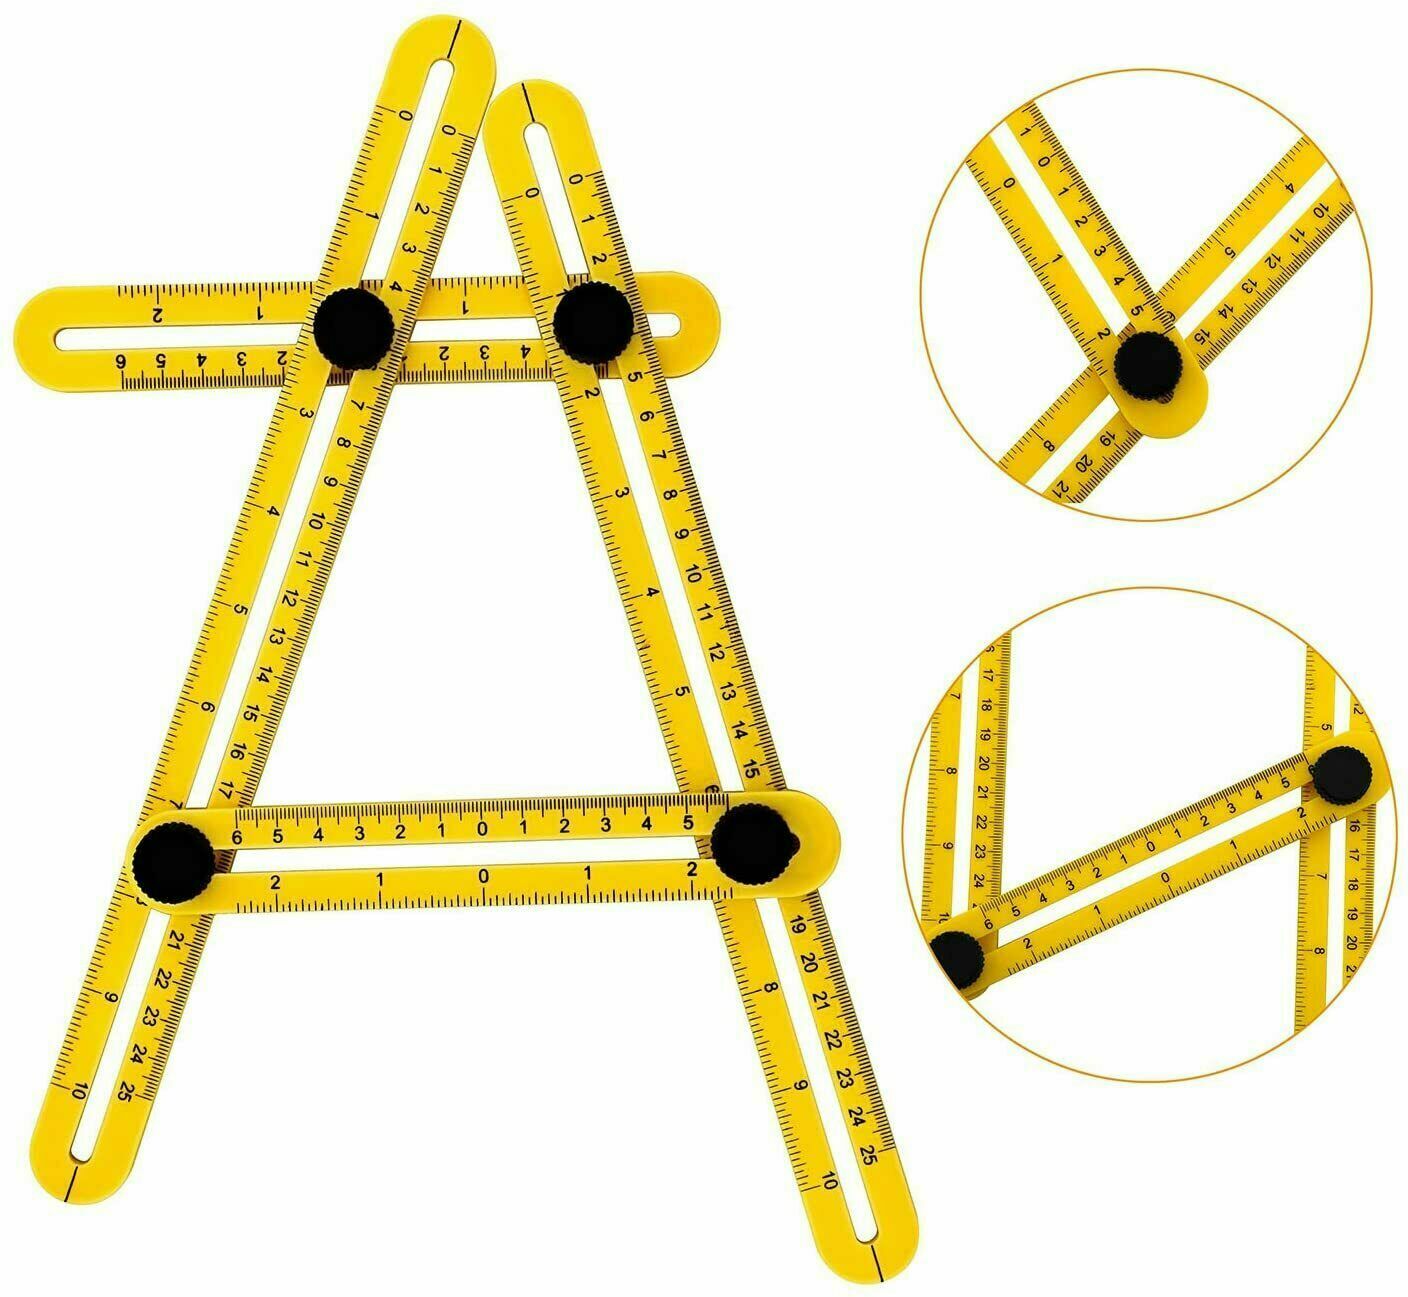 10 x Amenitee Universal Angularizer Ruler-Easy Angle Ruler-Multi Angle Measuring Tools